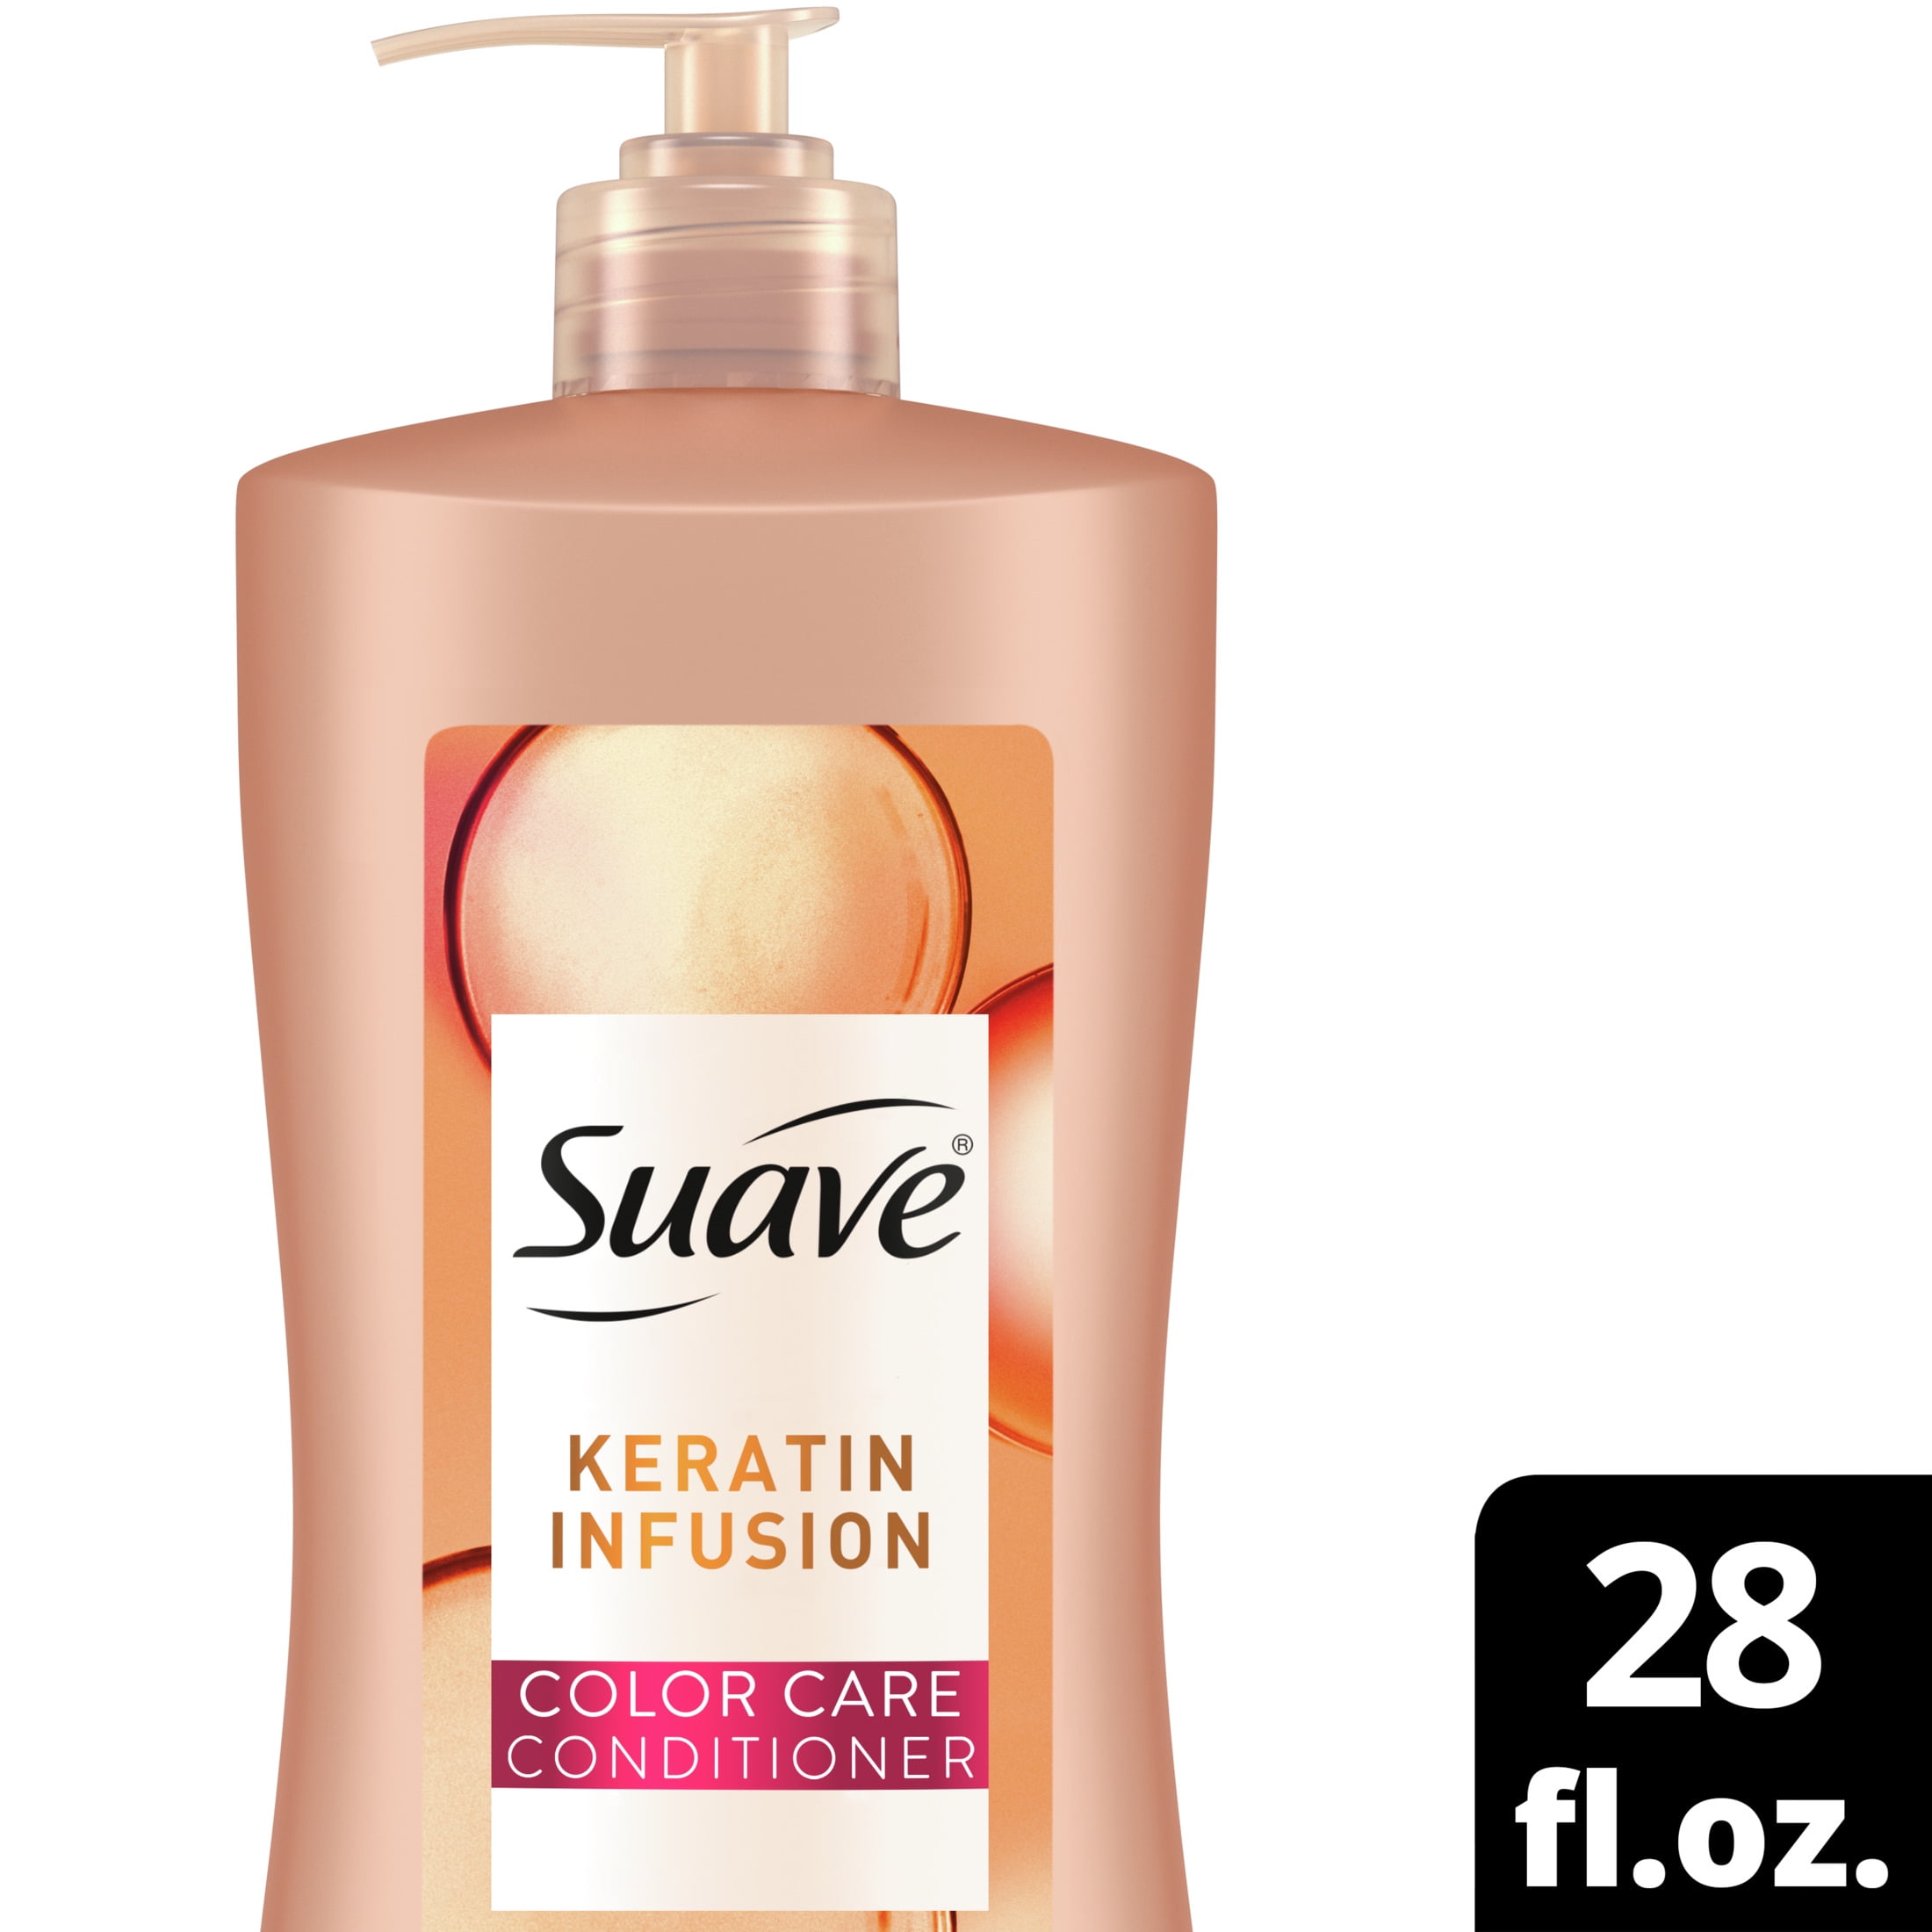 Suave Keratin Infusion Color Care Daily Conditioner 28 fl oz